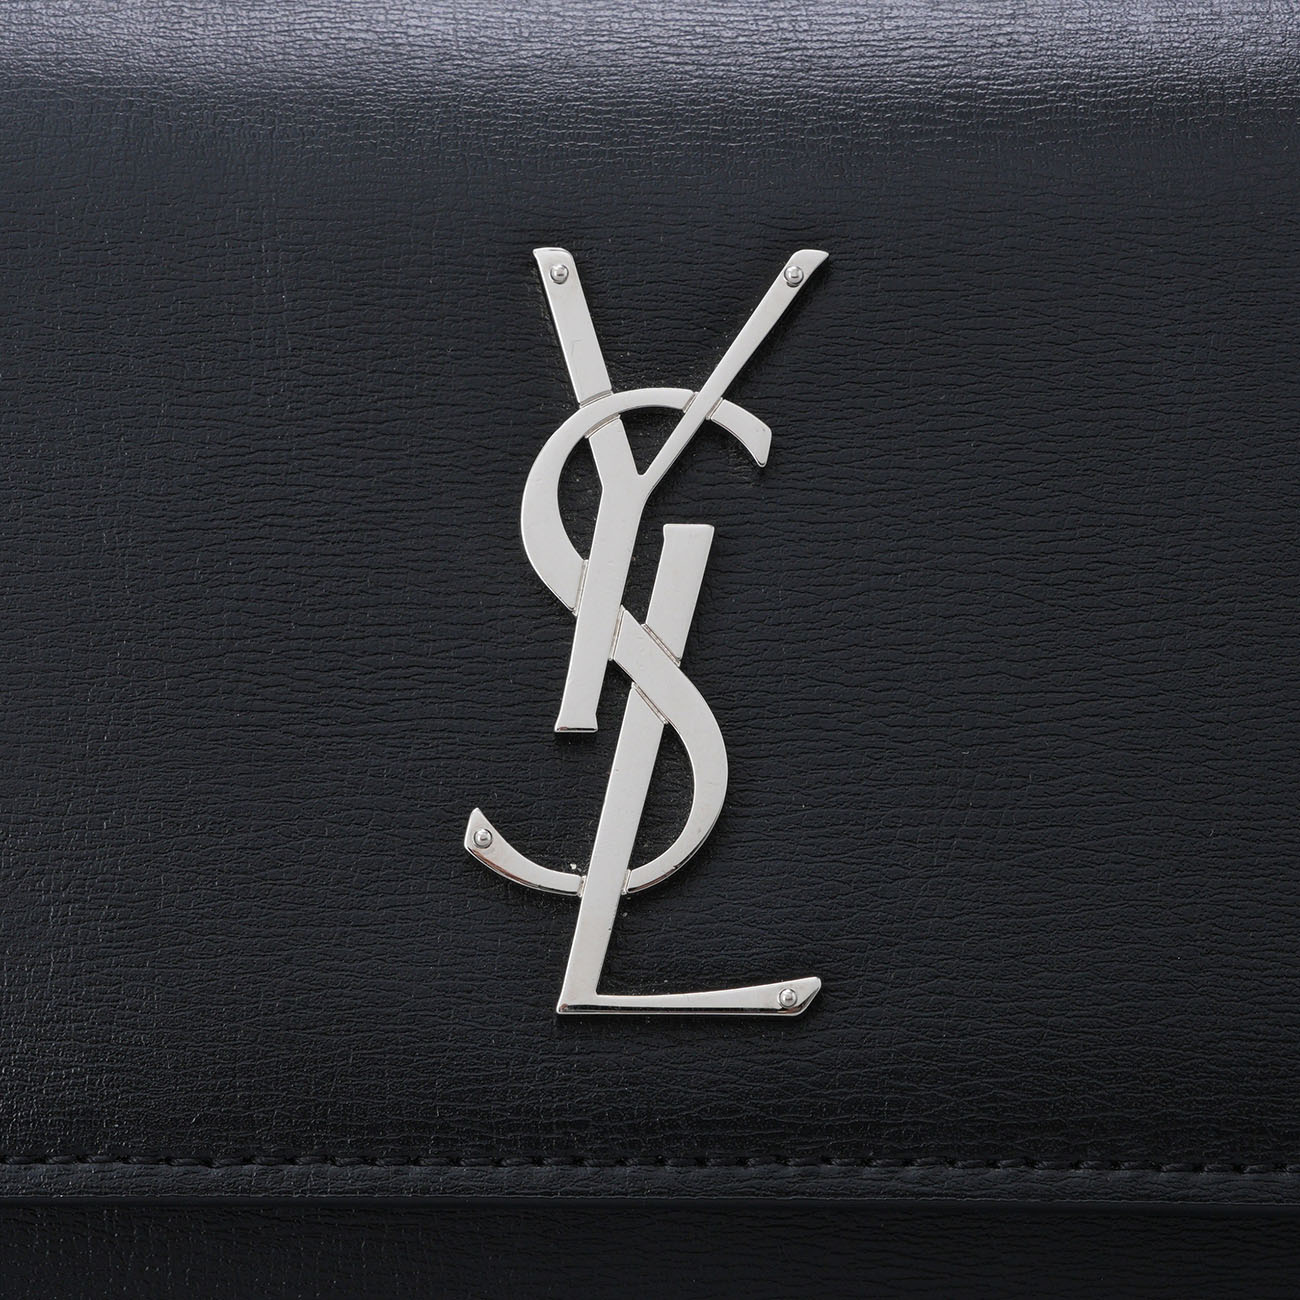 Yves Saint Laurent(USED)생로랑 442906 선셋 미듐 체인백 블랙 은장